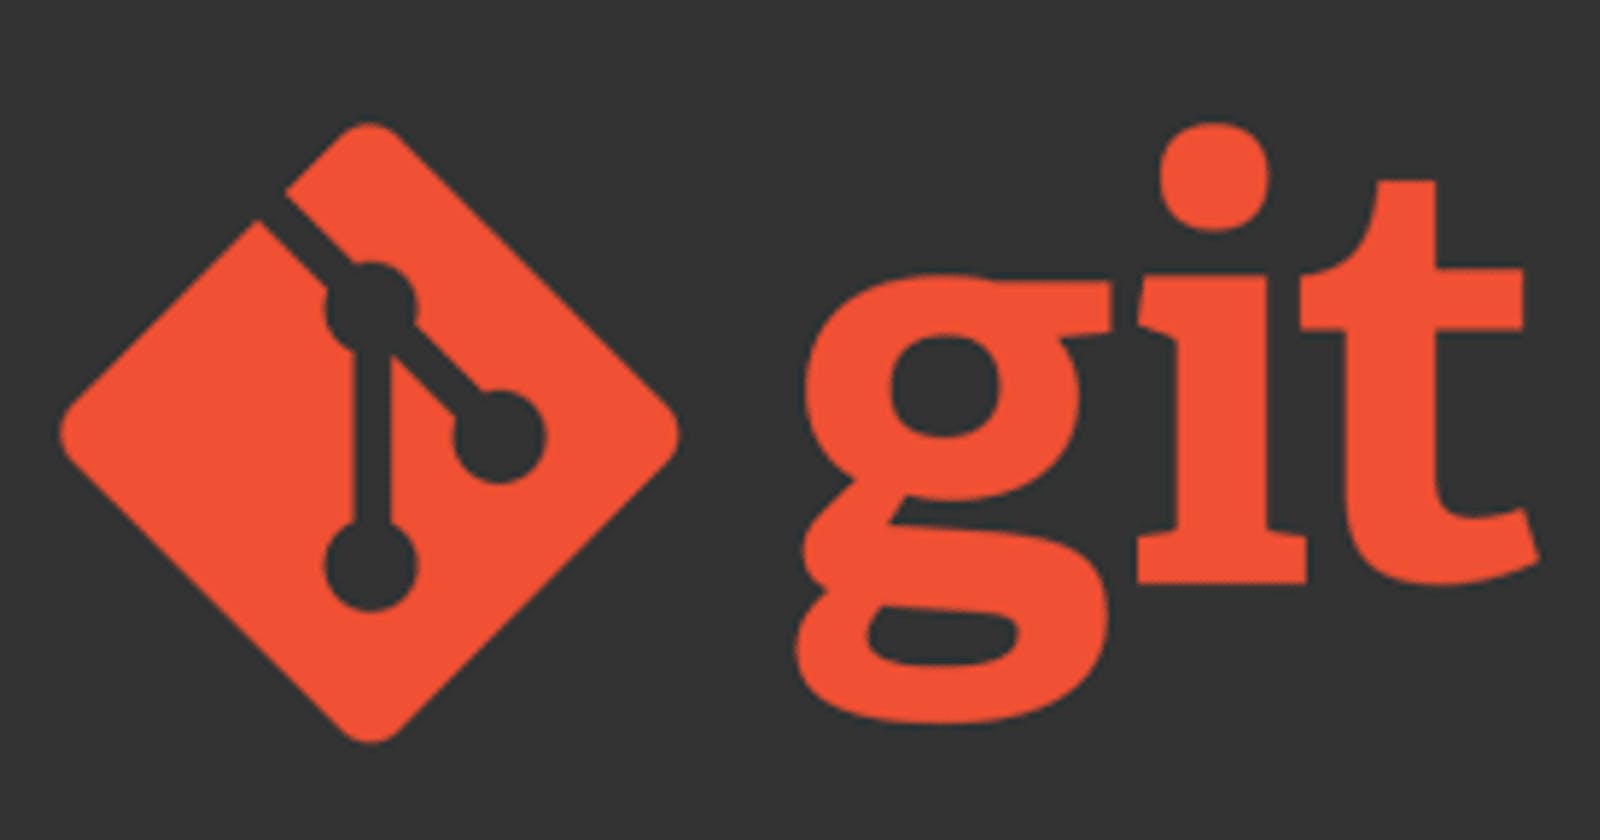 List of all Git Commands